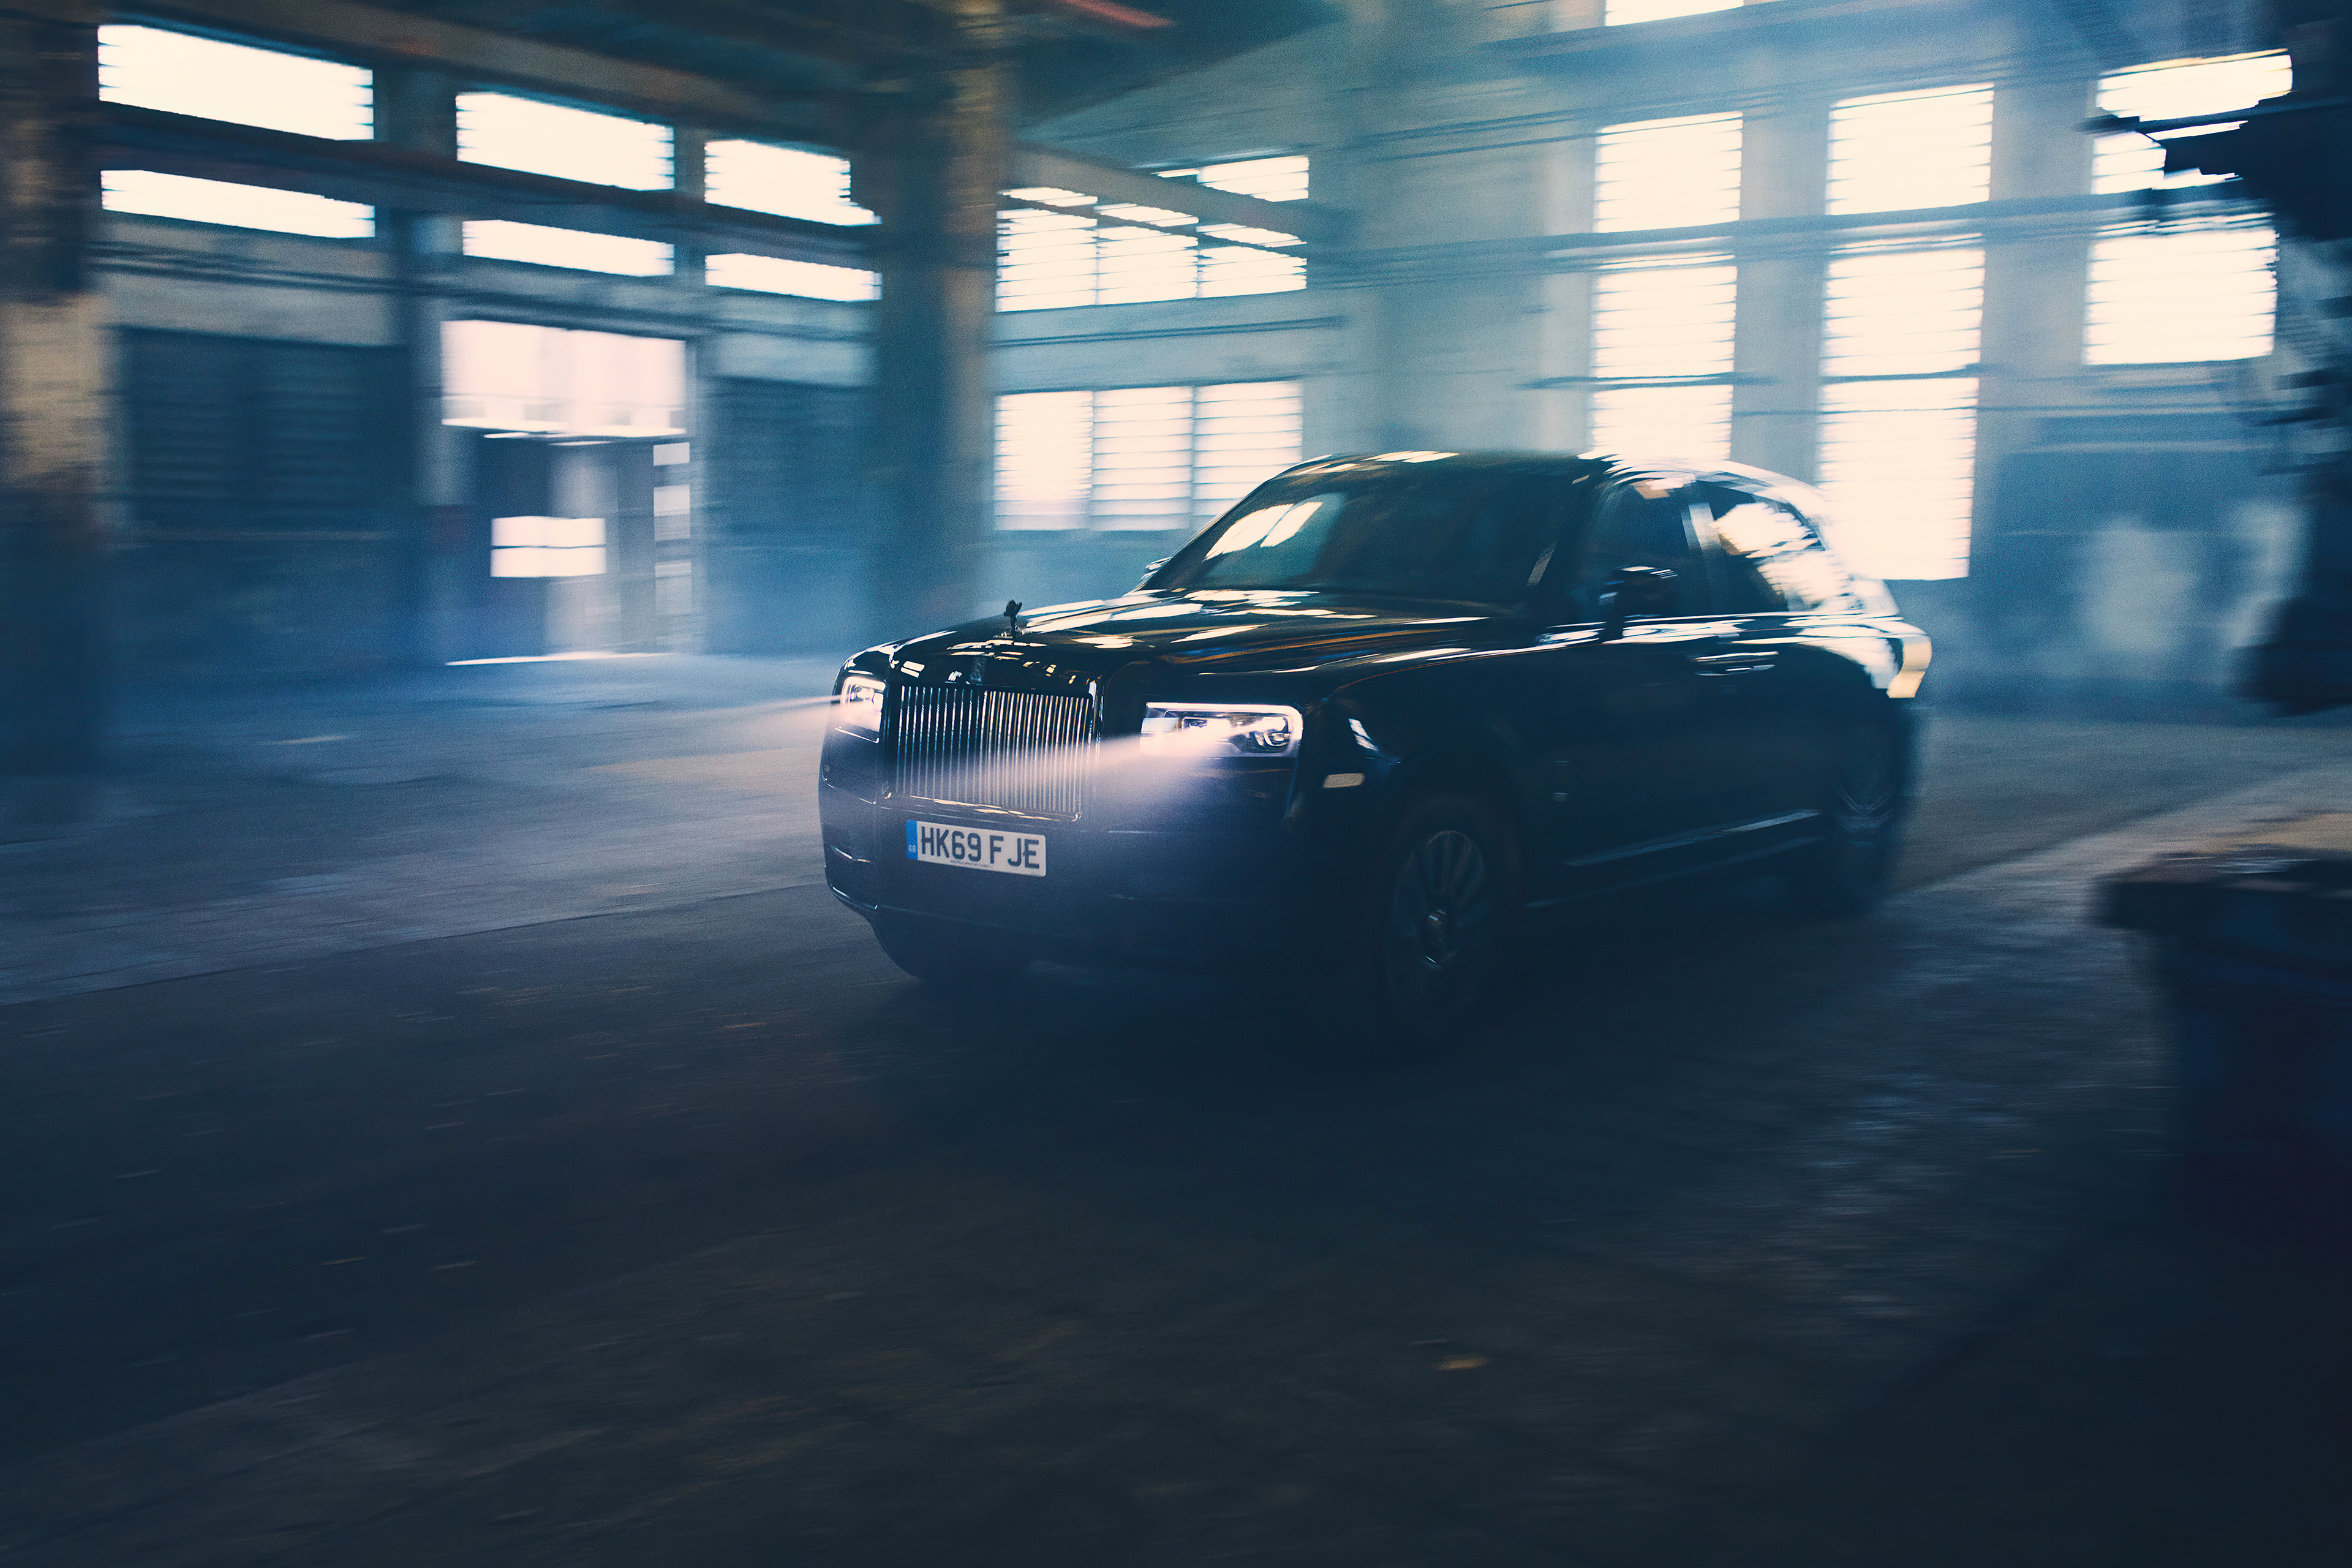 Black Rolls Royce Cullinan in a dusty garage